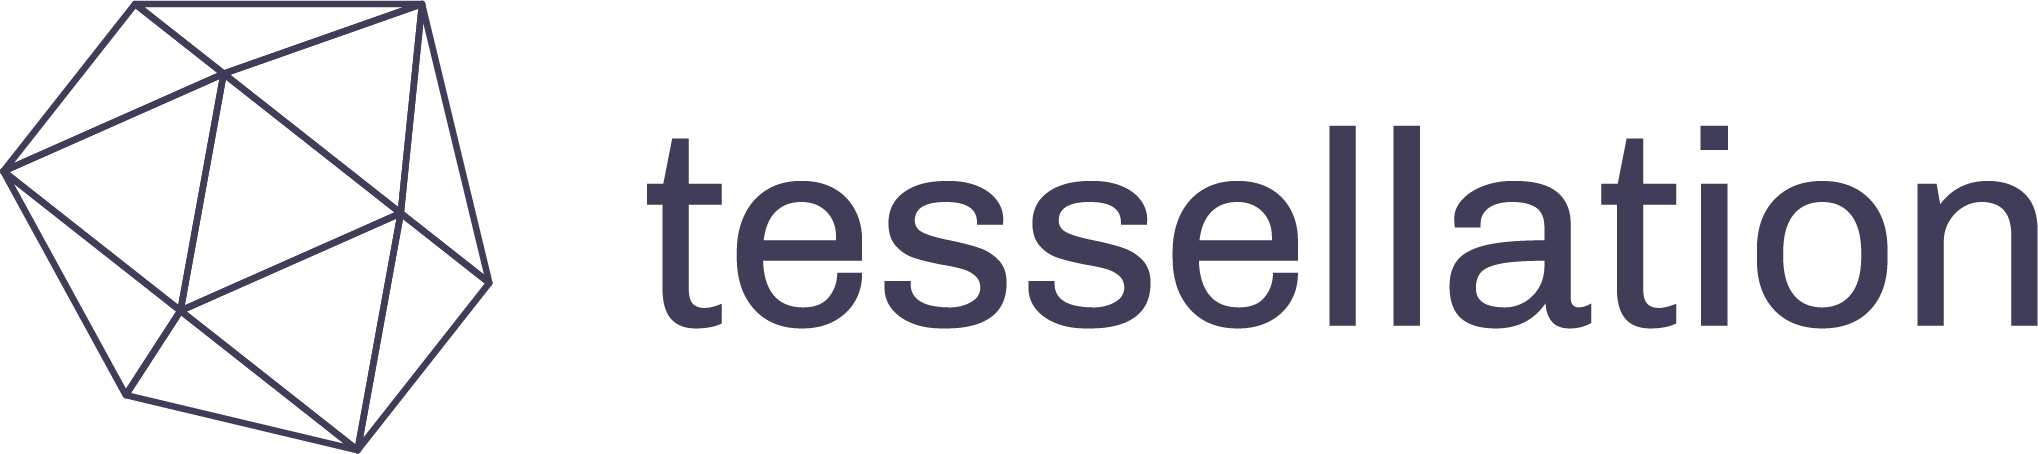 Tessellation Logo